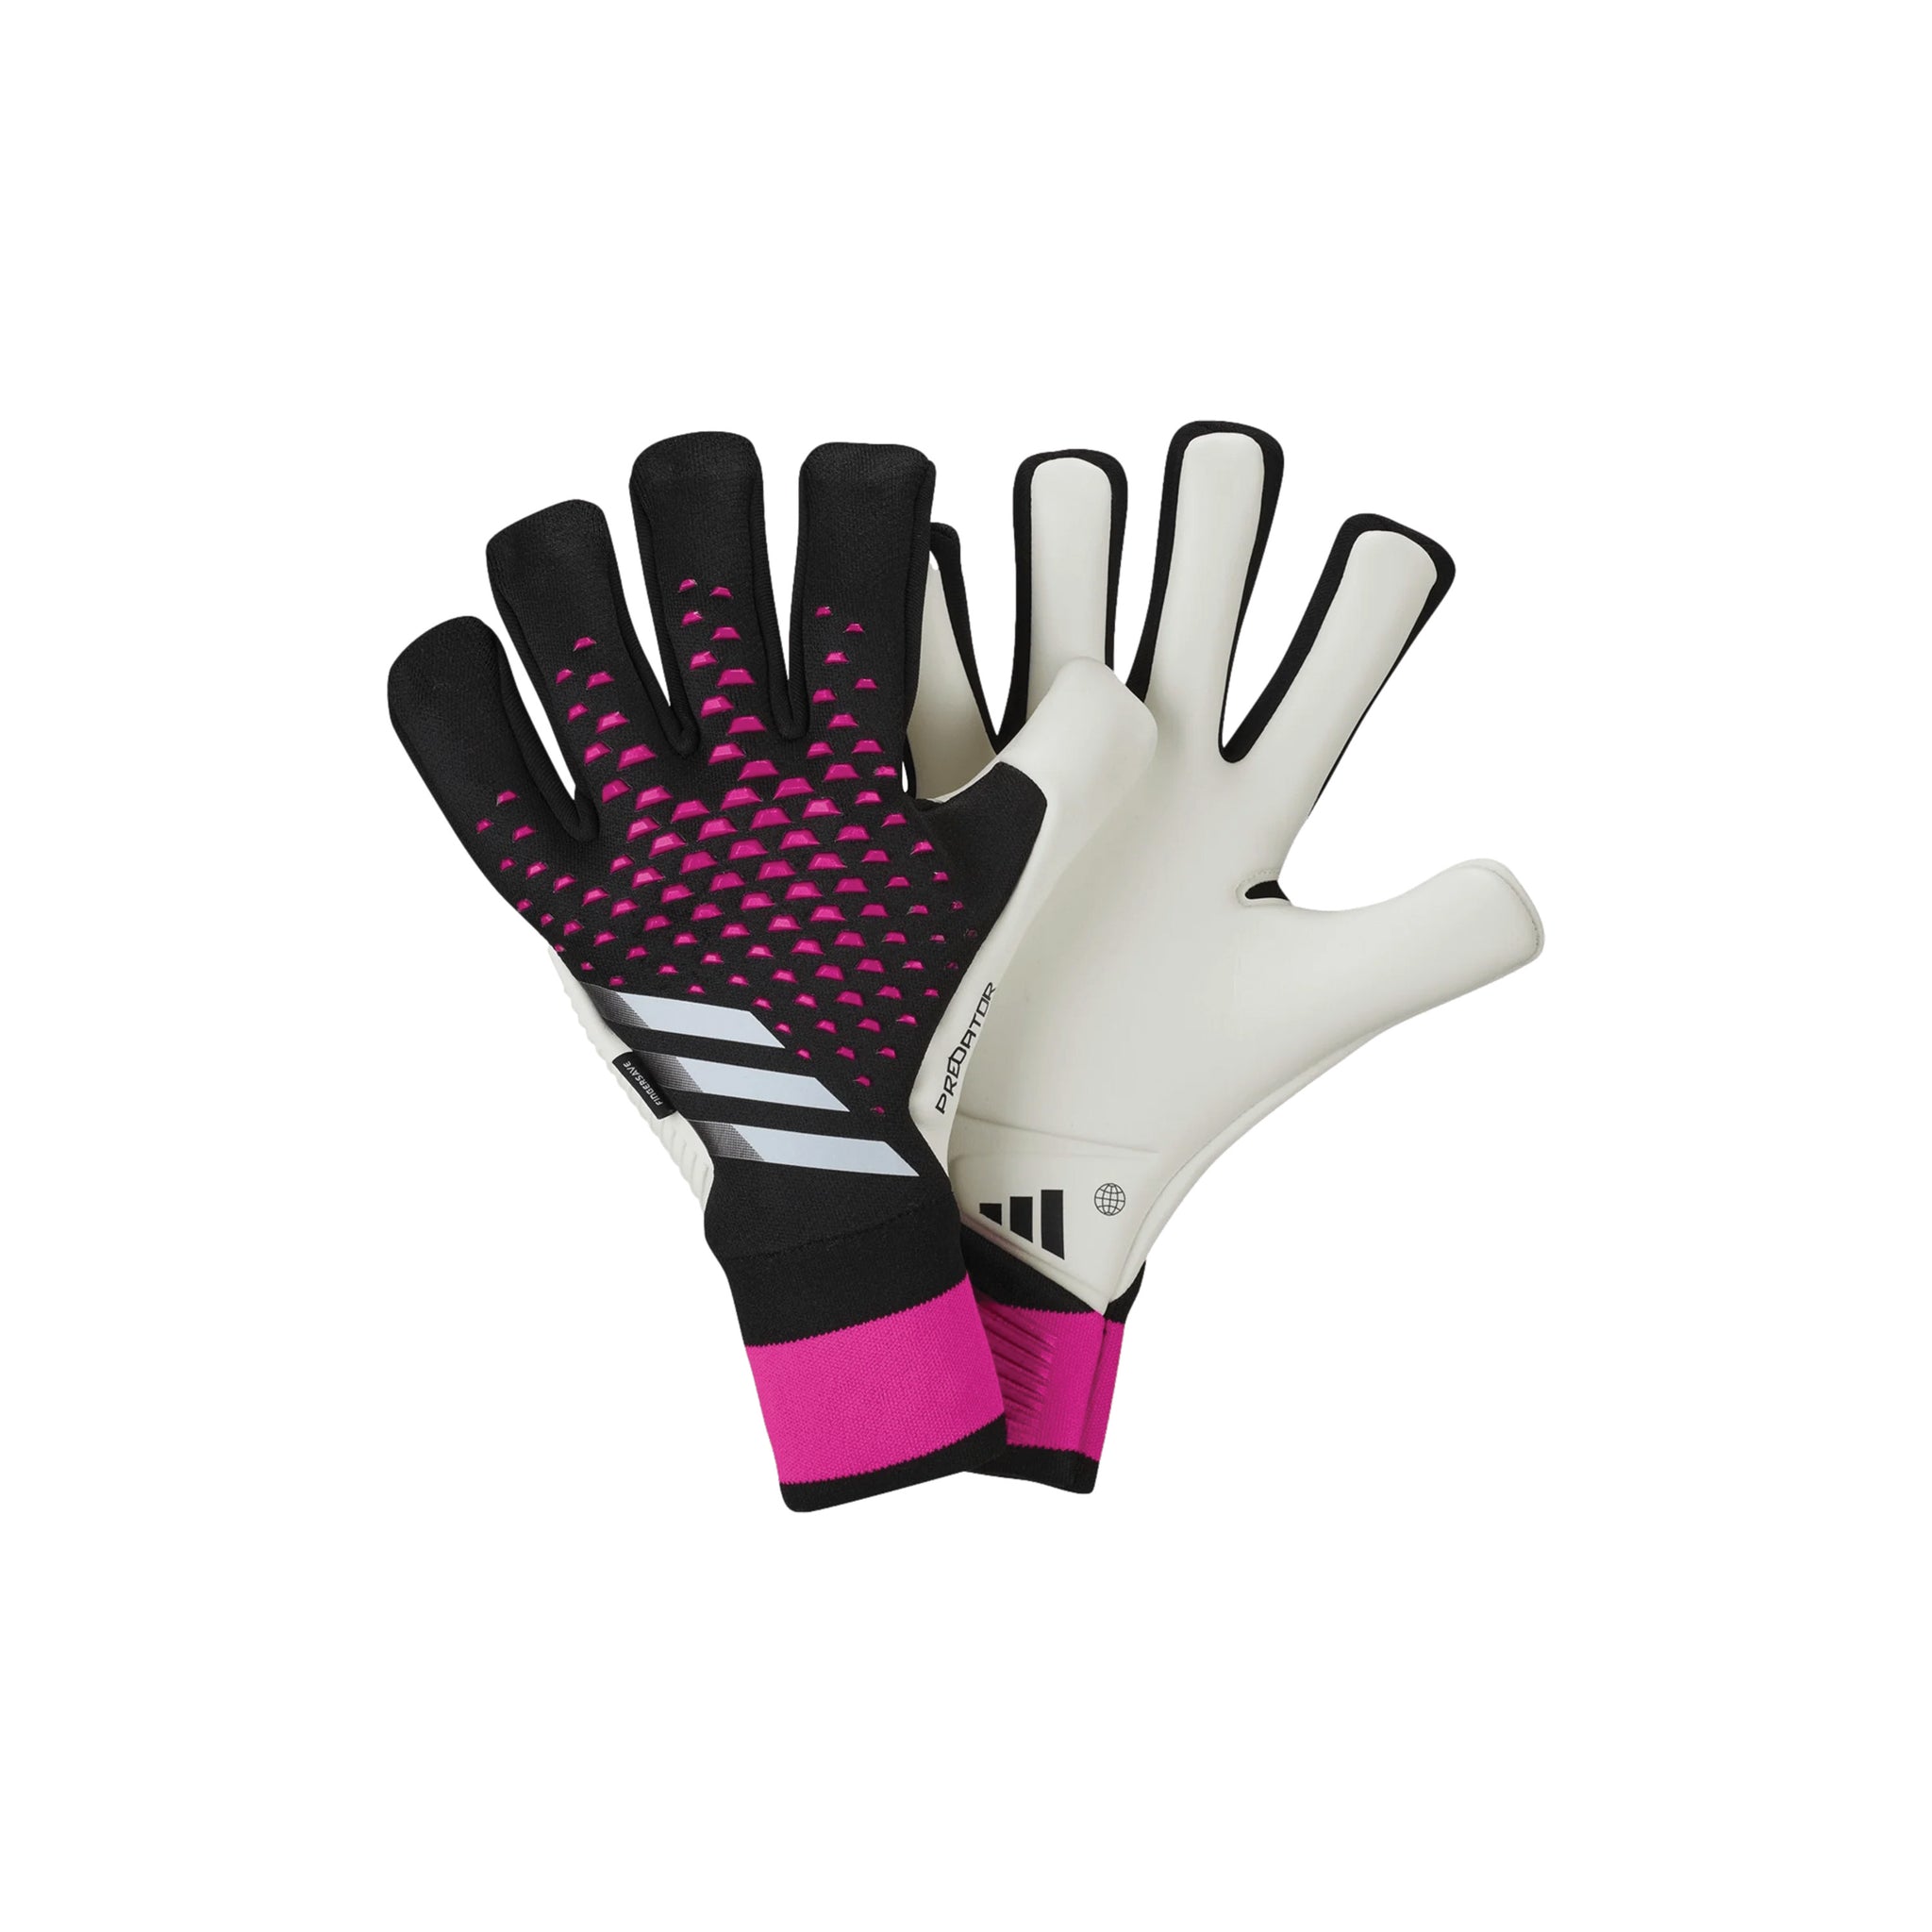 ADIDAS Predator GL Pro FS Gloves